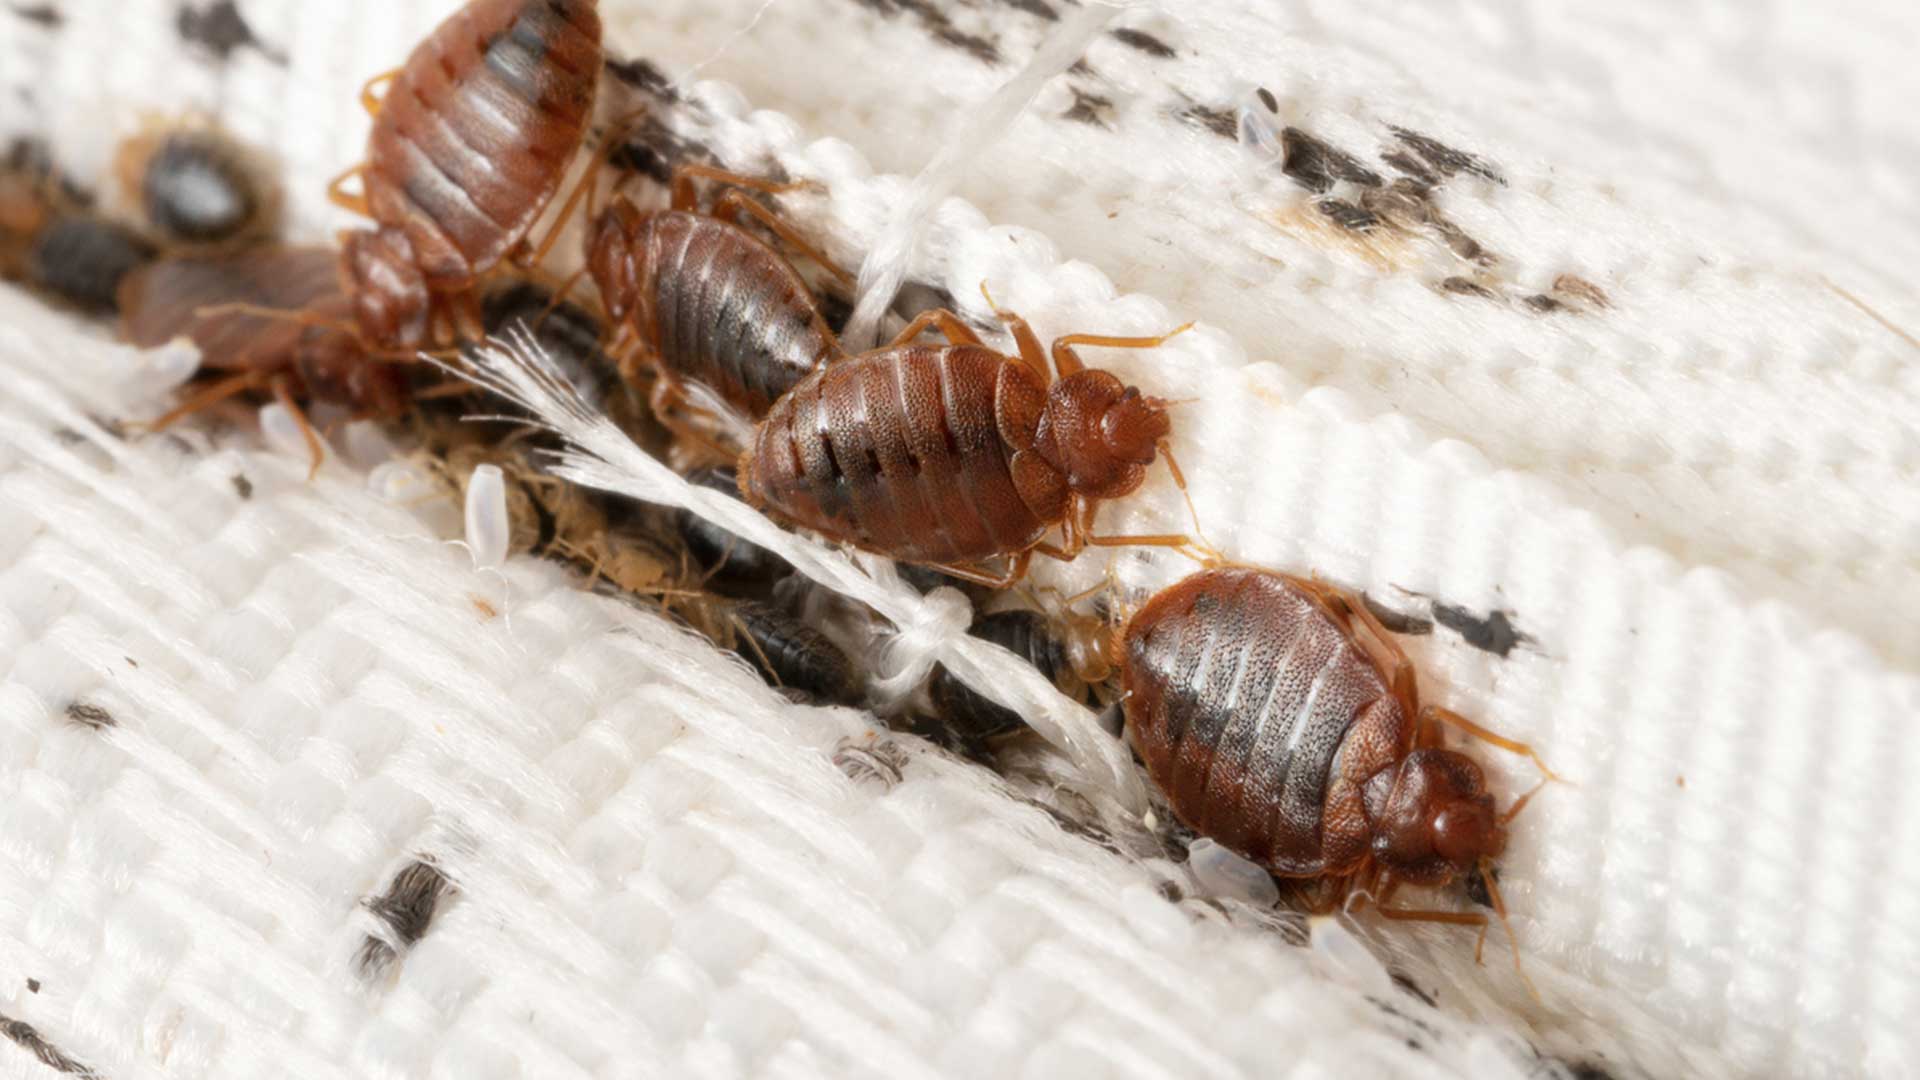 Bedbugs crawling on linen